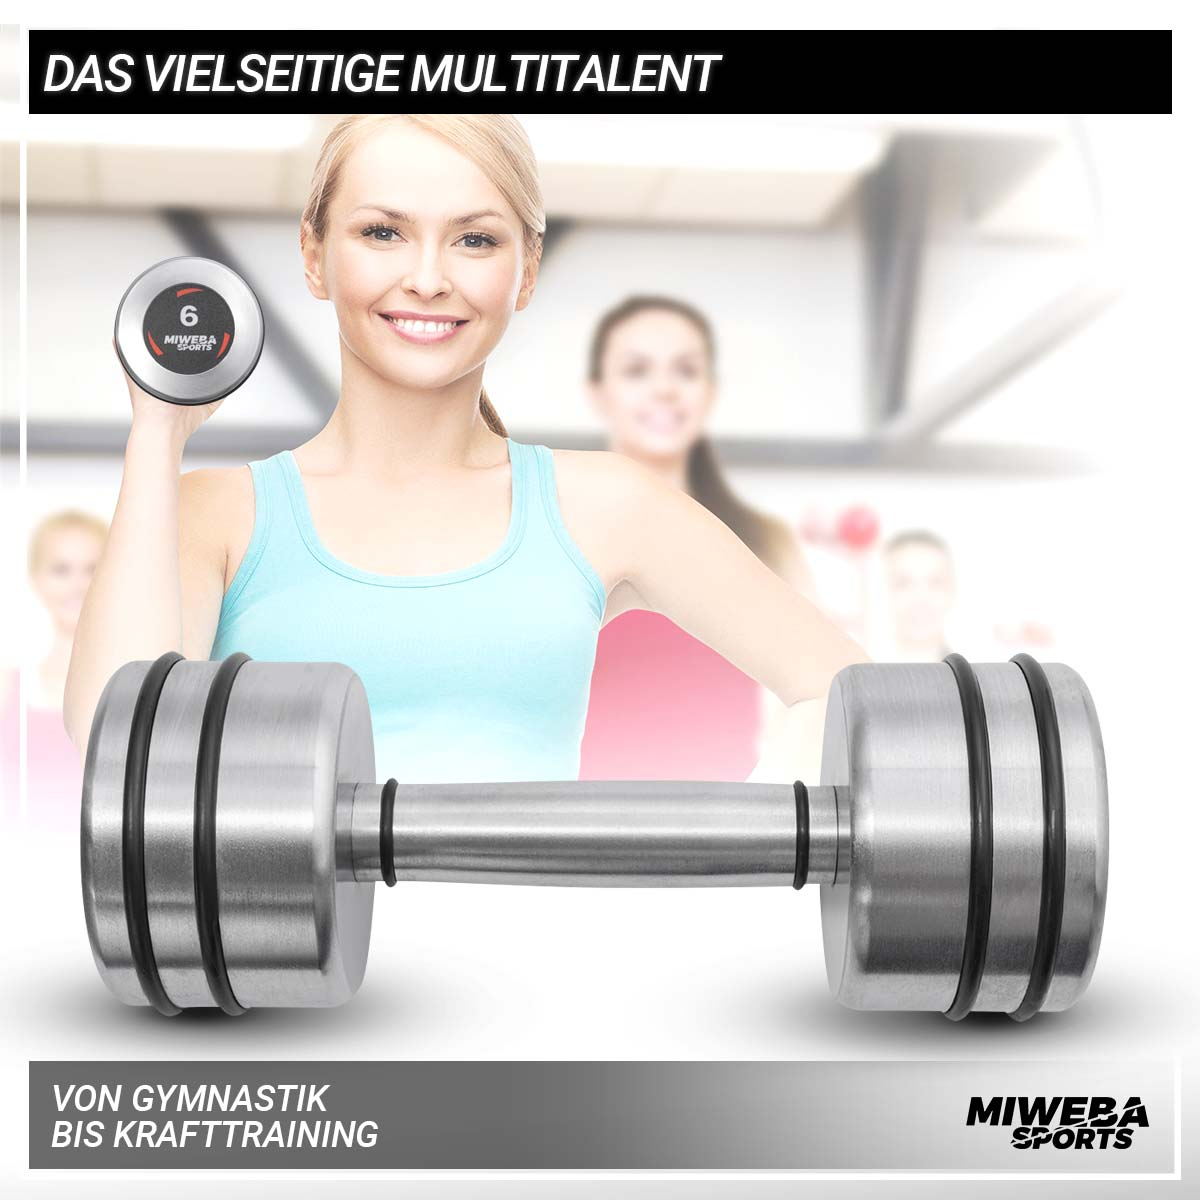 2x Matt silber Chrom Hanteln Kurzhanteln, Fitnesszubehör SPORTS MIWEBA kg 6.0